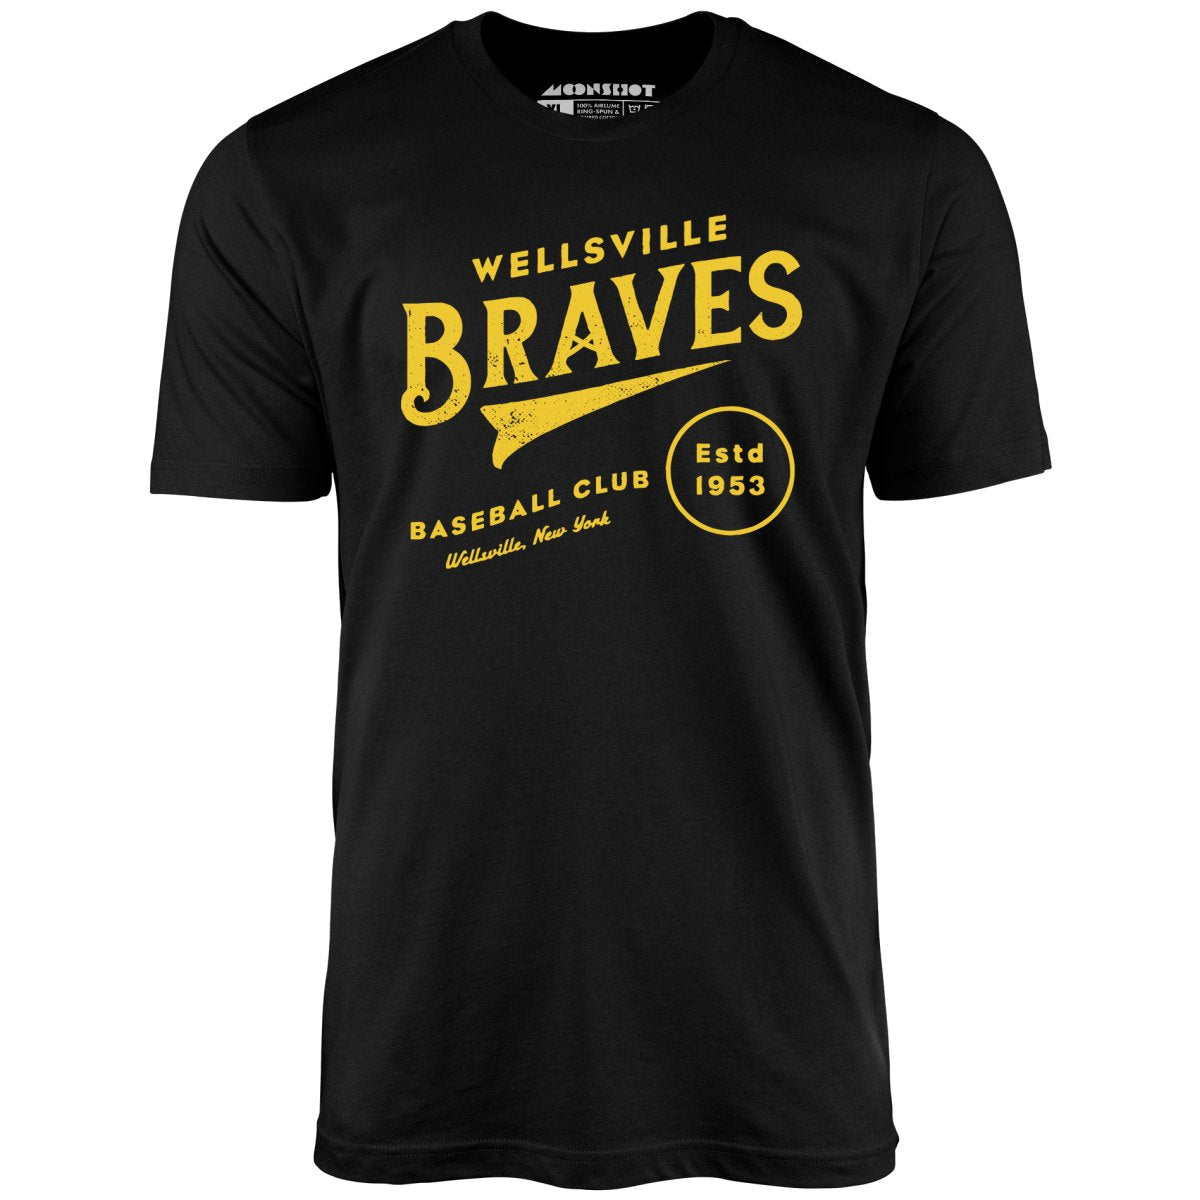 Wellsville Braves - New York - Vintage Defunct Baseball Teams - Unisex T-Shirt